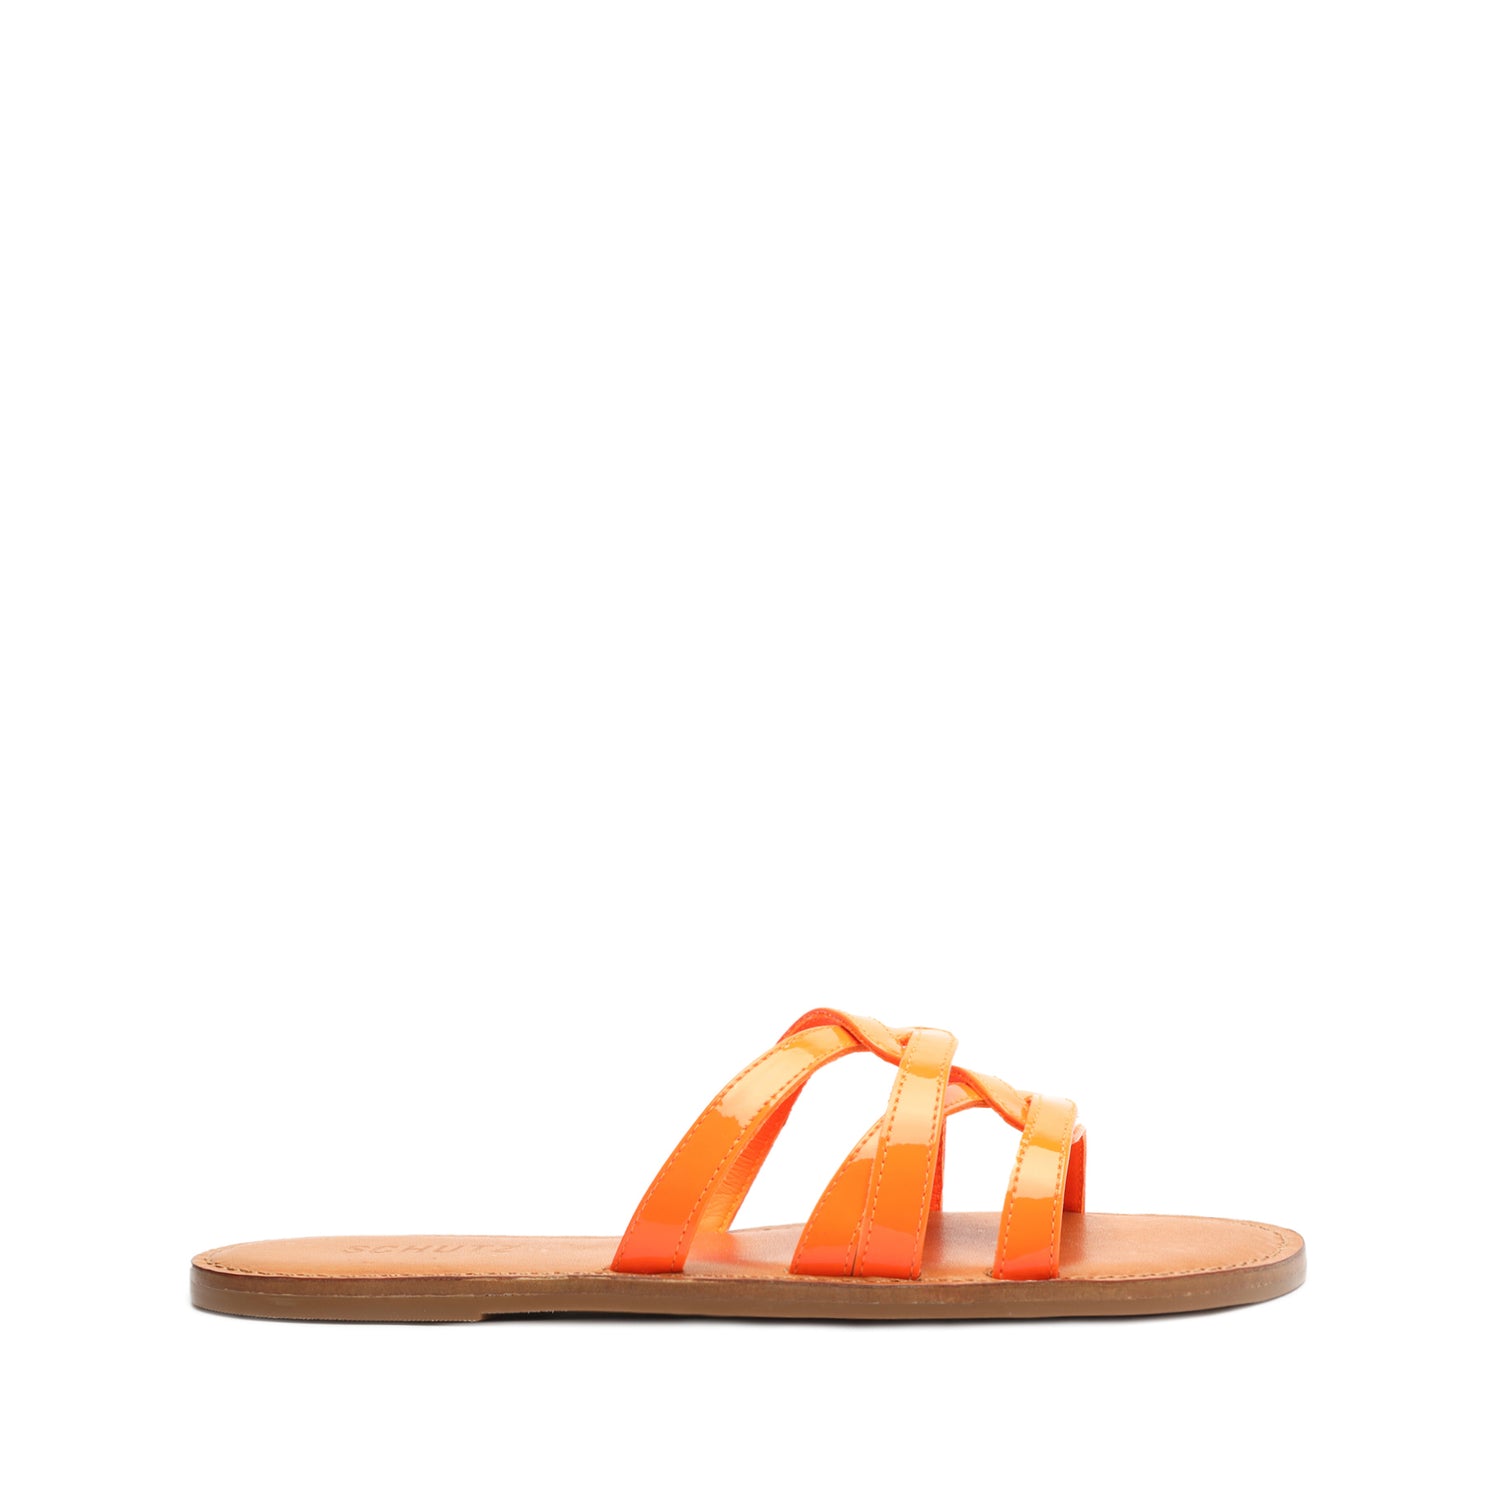 Lyta Patent Leather Sandal Flats OLD 5 Orange Patent Leather - Schutz Shoes